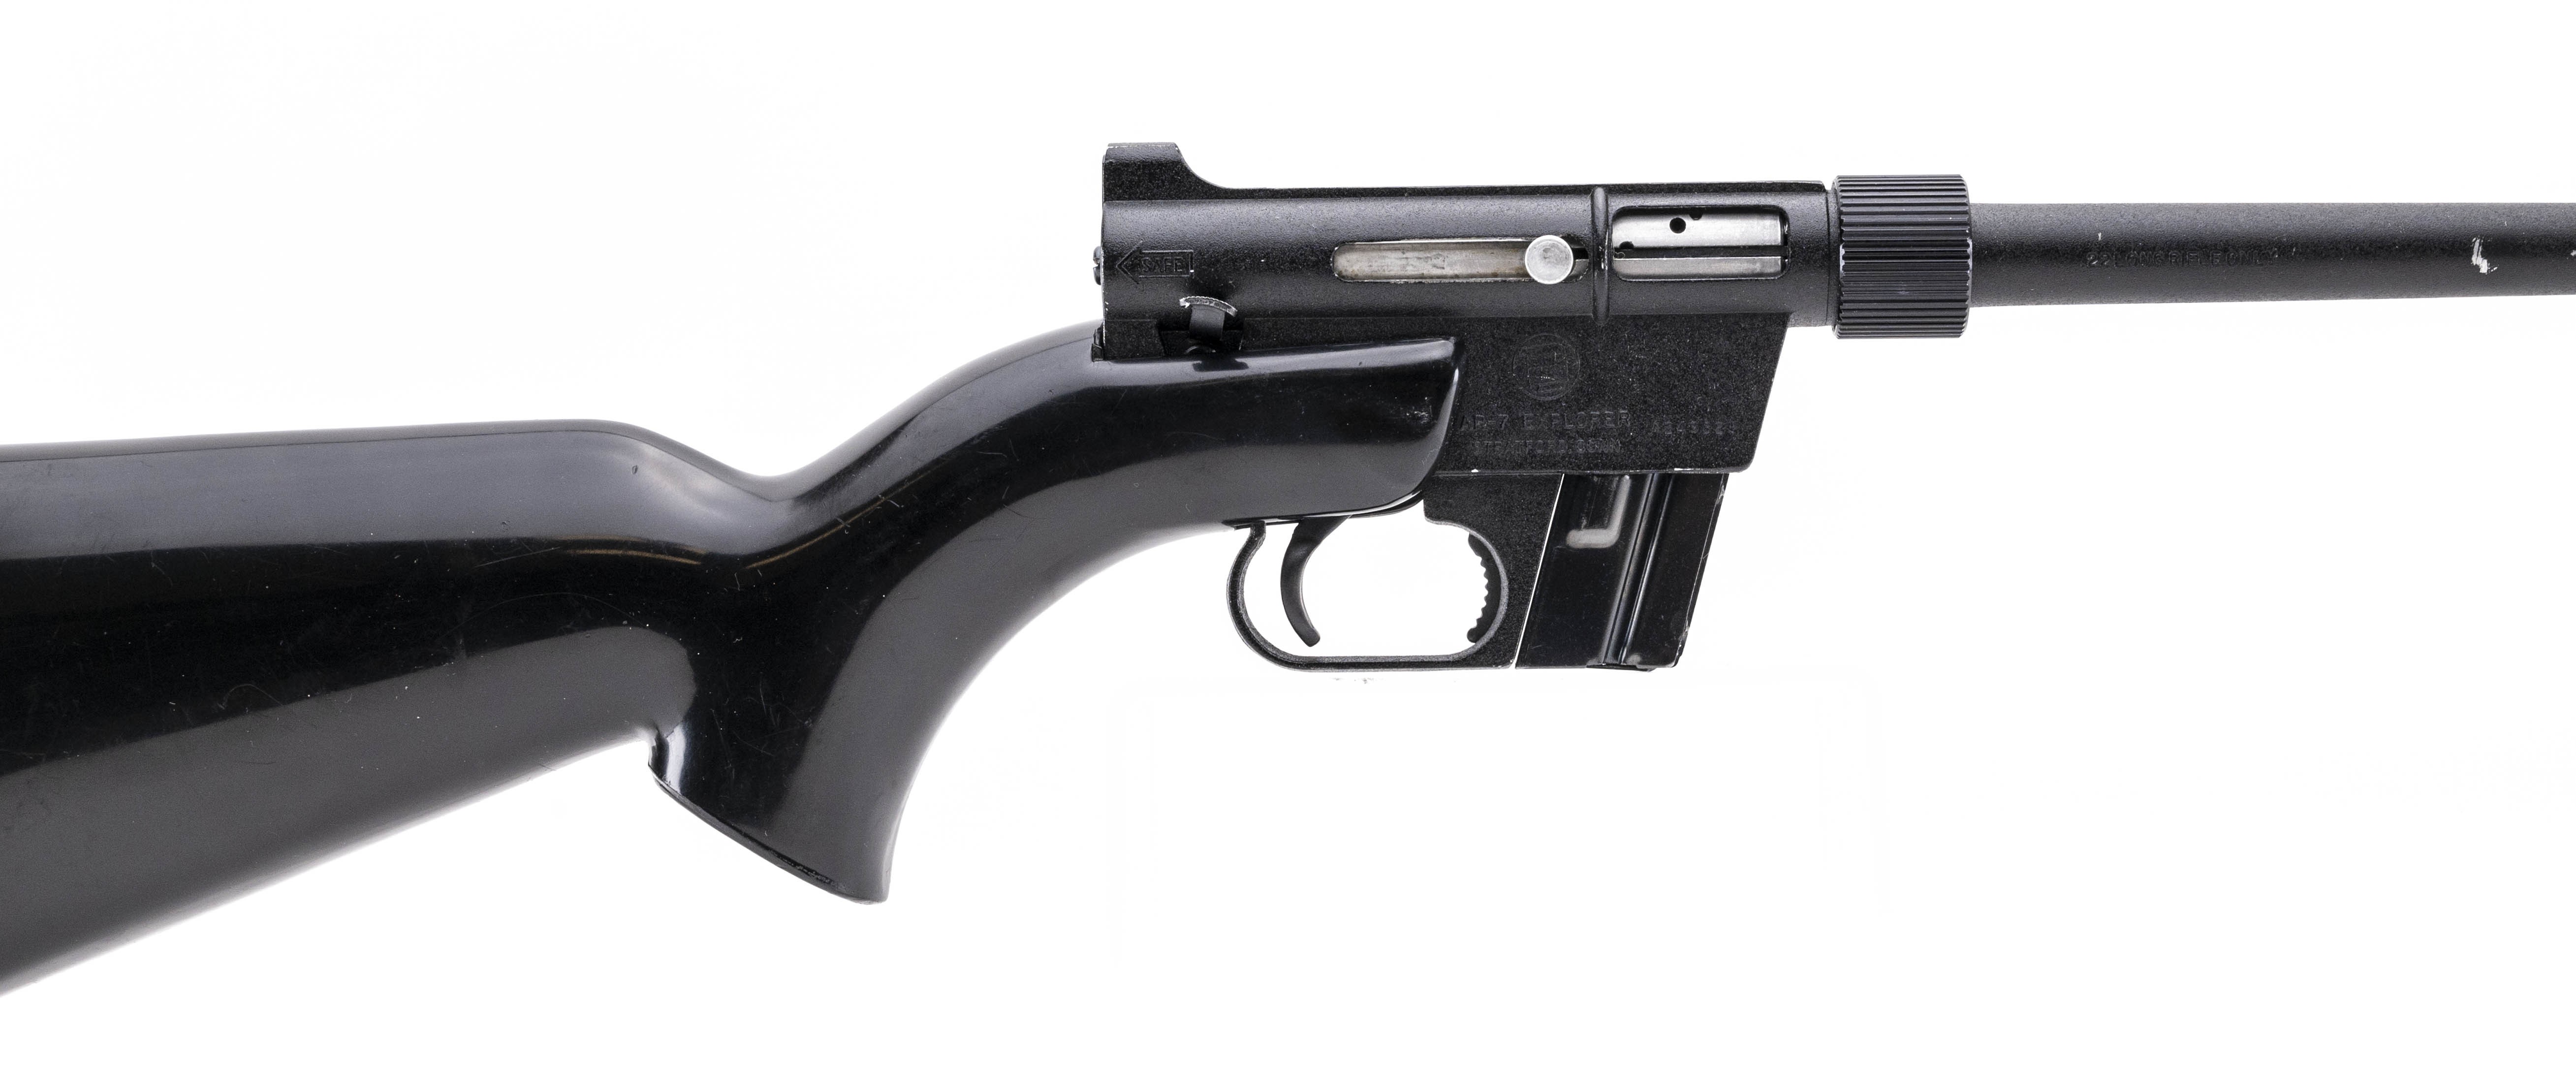 Charter Arms AR7 .22 LR caliber rifle for sale.